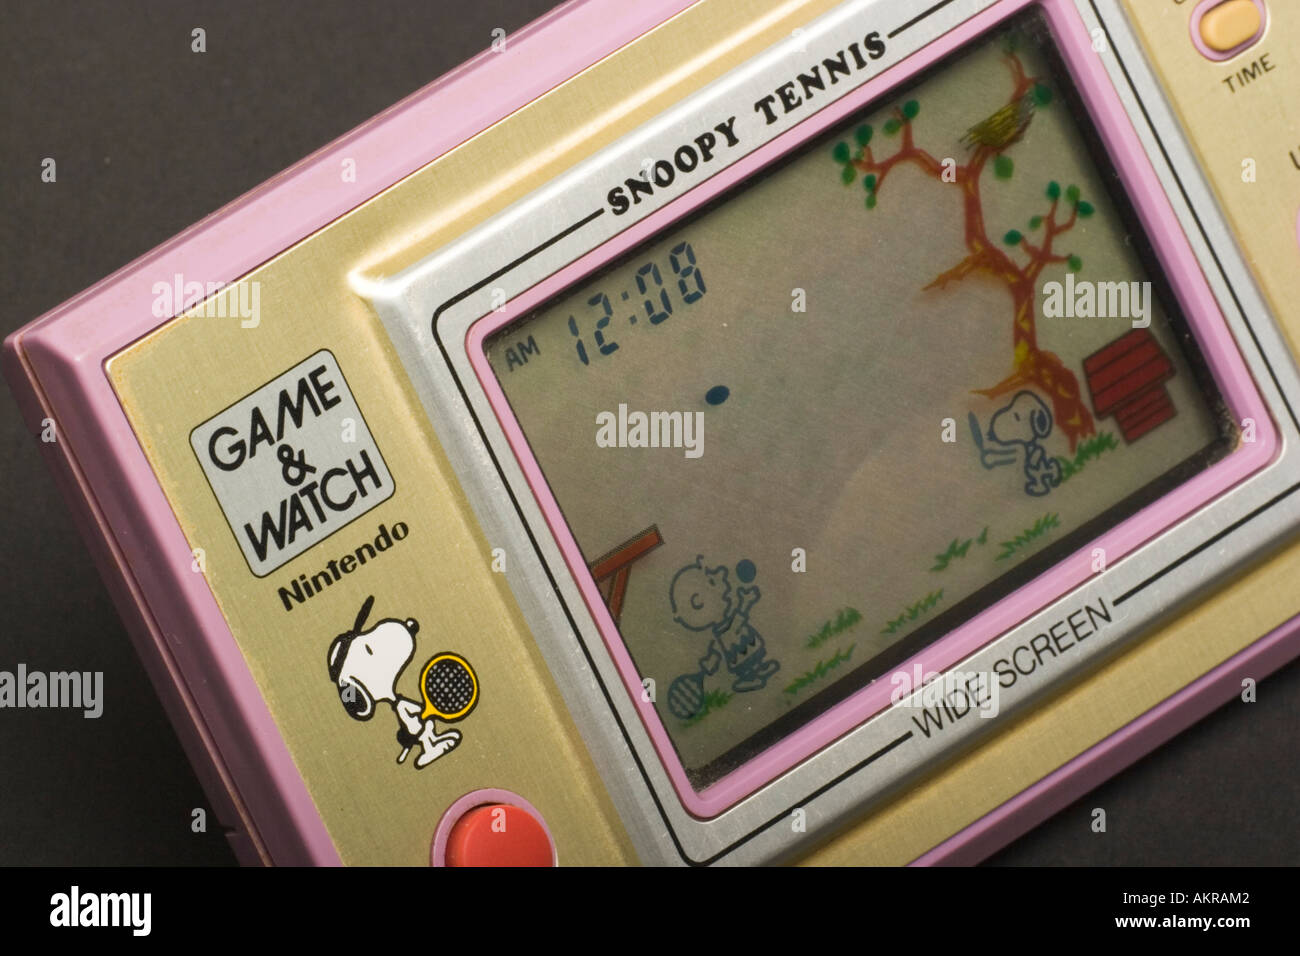 Nintendo Game Watch Snoopy Tennis Gadget Vintage Computer Stock Photo -  Alamy